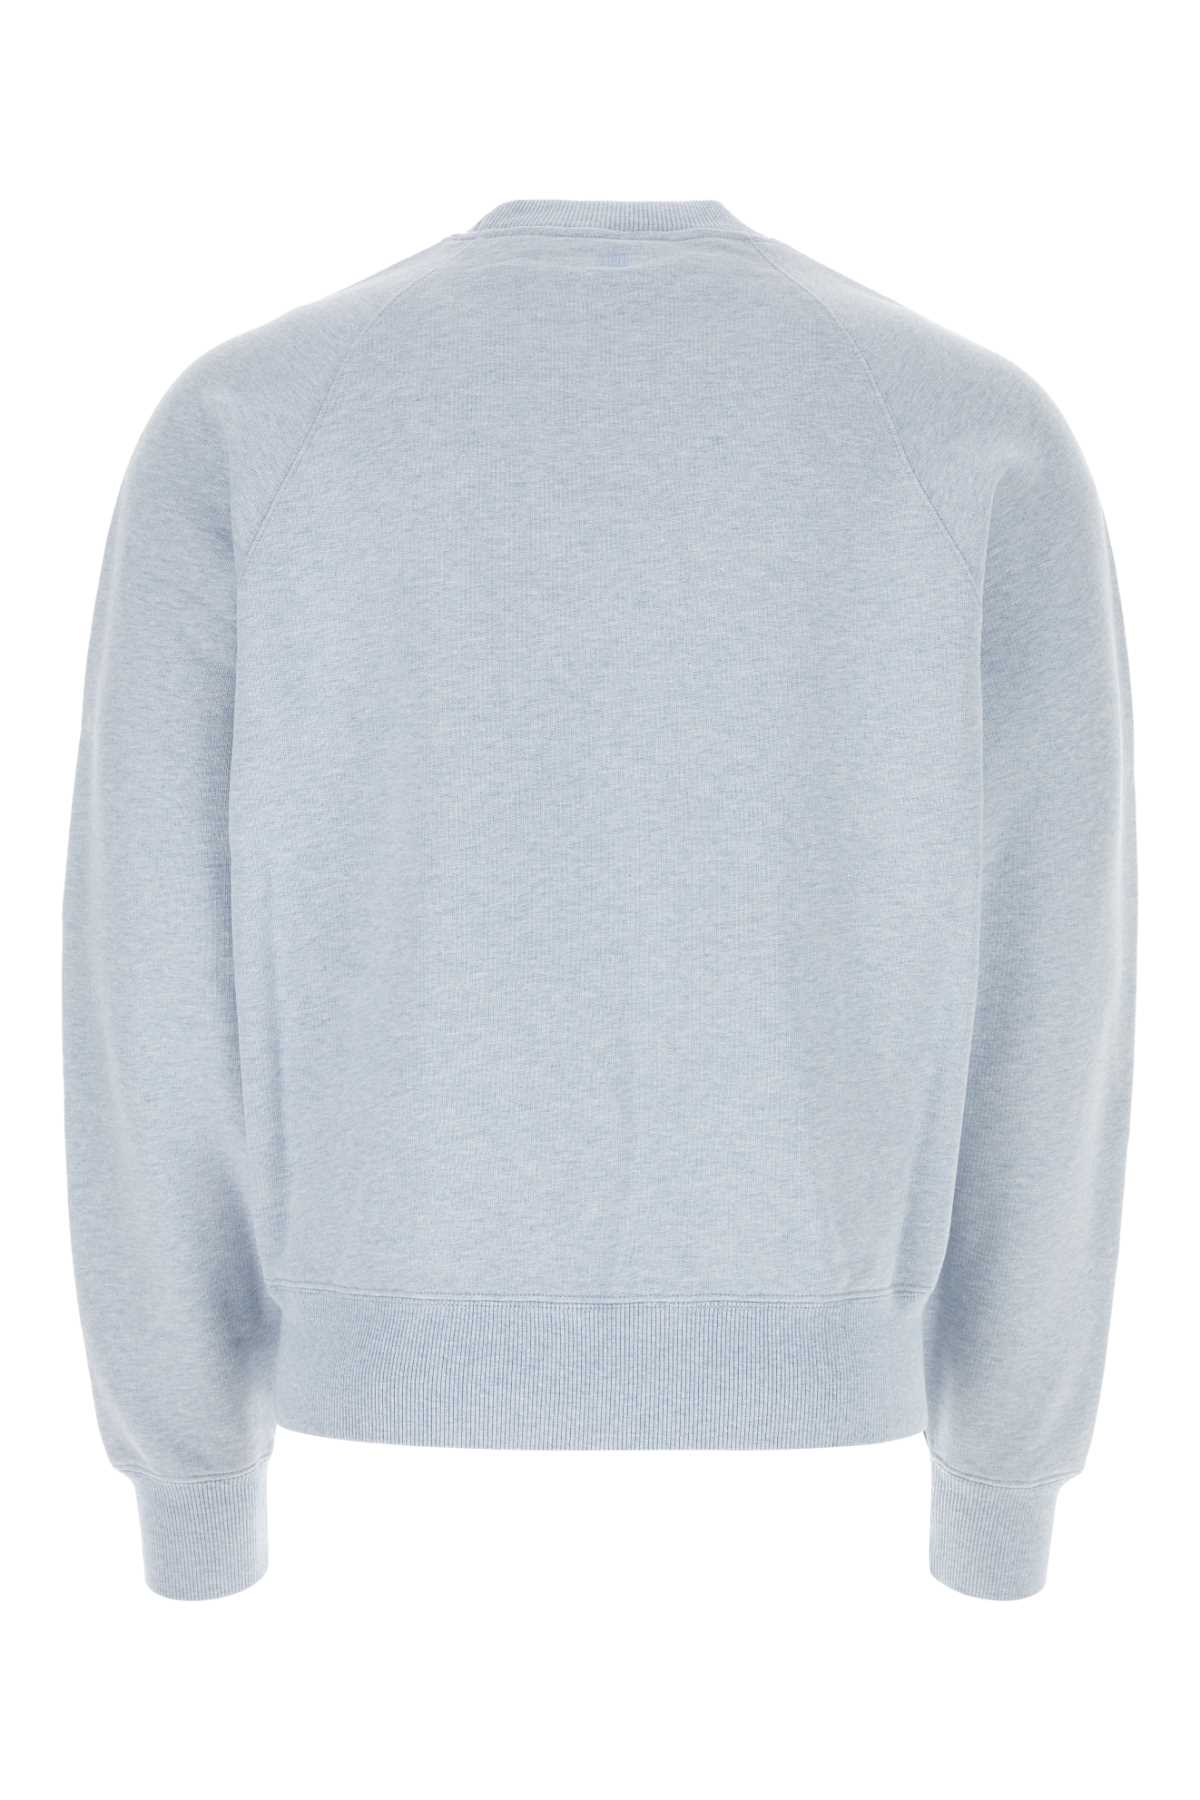 Ami Alexandre Mattiussi Melange Light-blue Cotton Sweatshirt In Heathercashmereblue